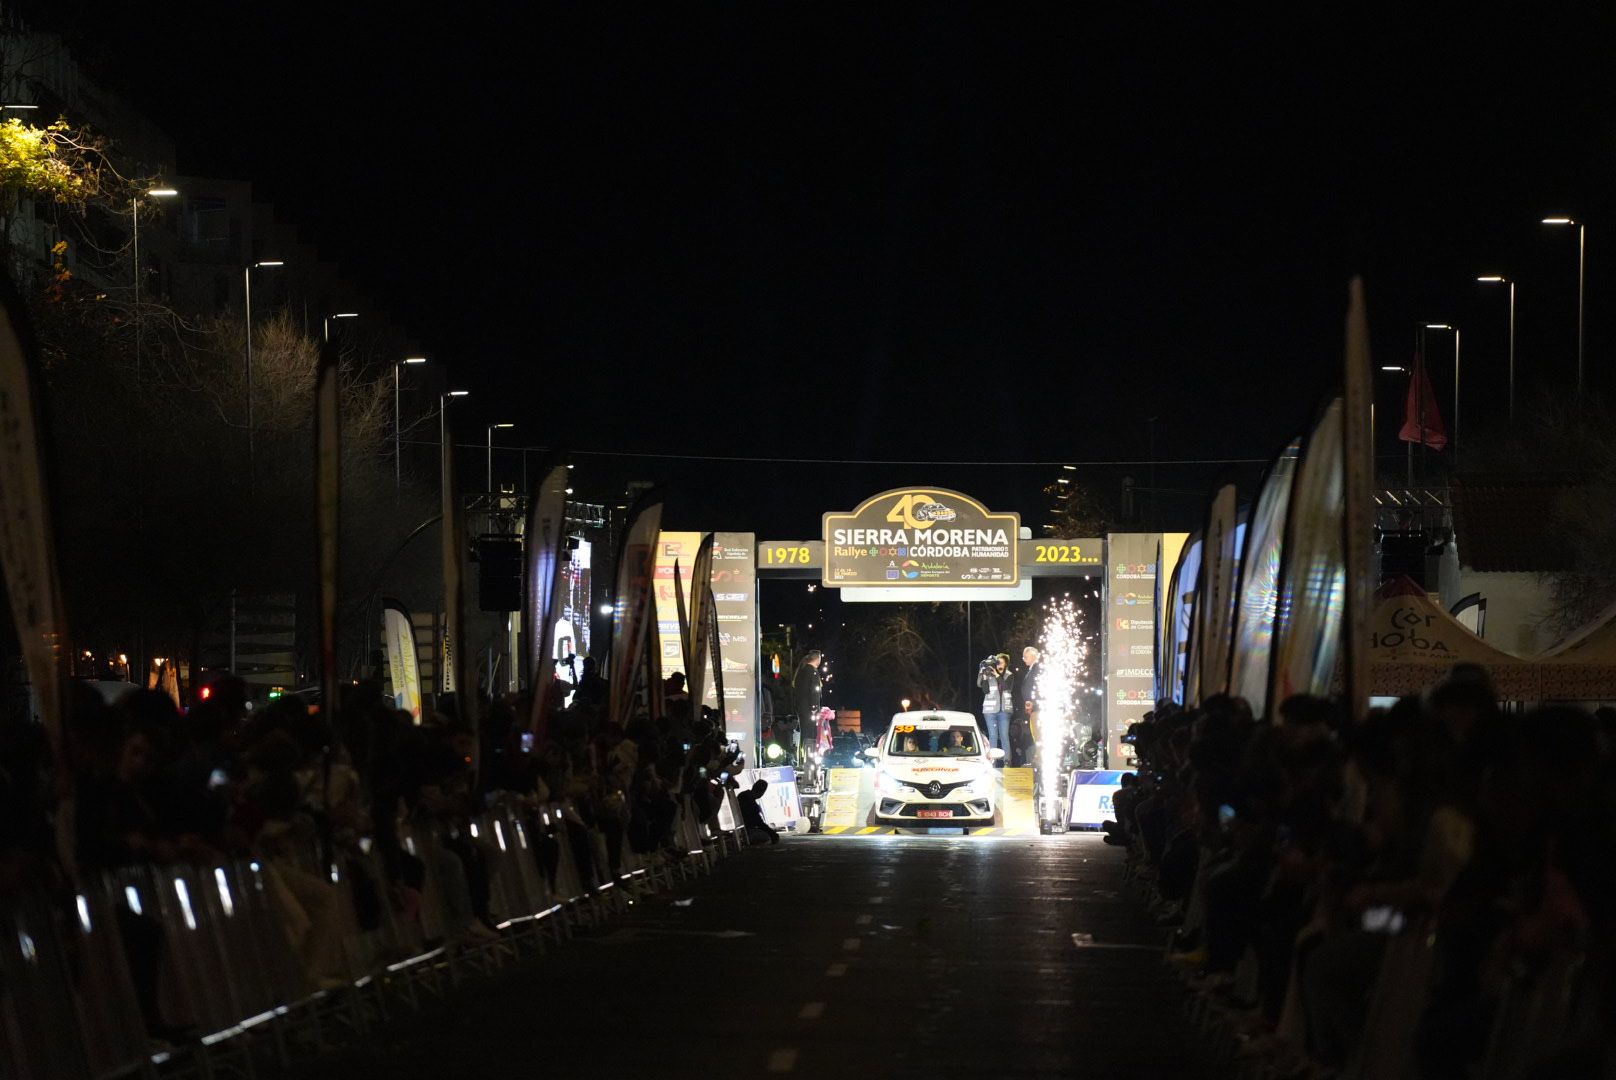 Salida oficial del Rallye Sierra Morena